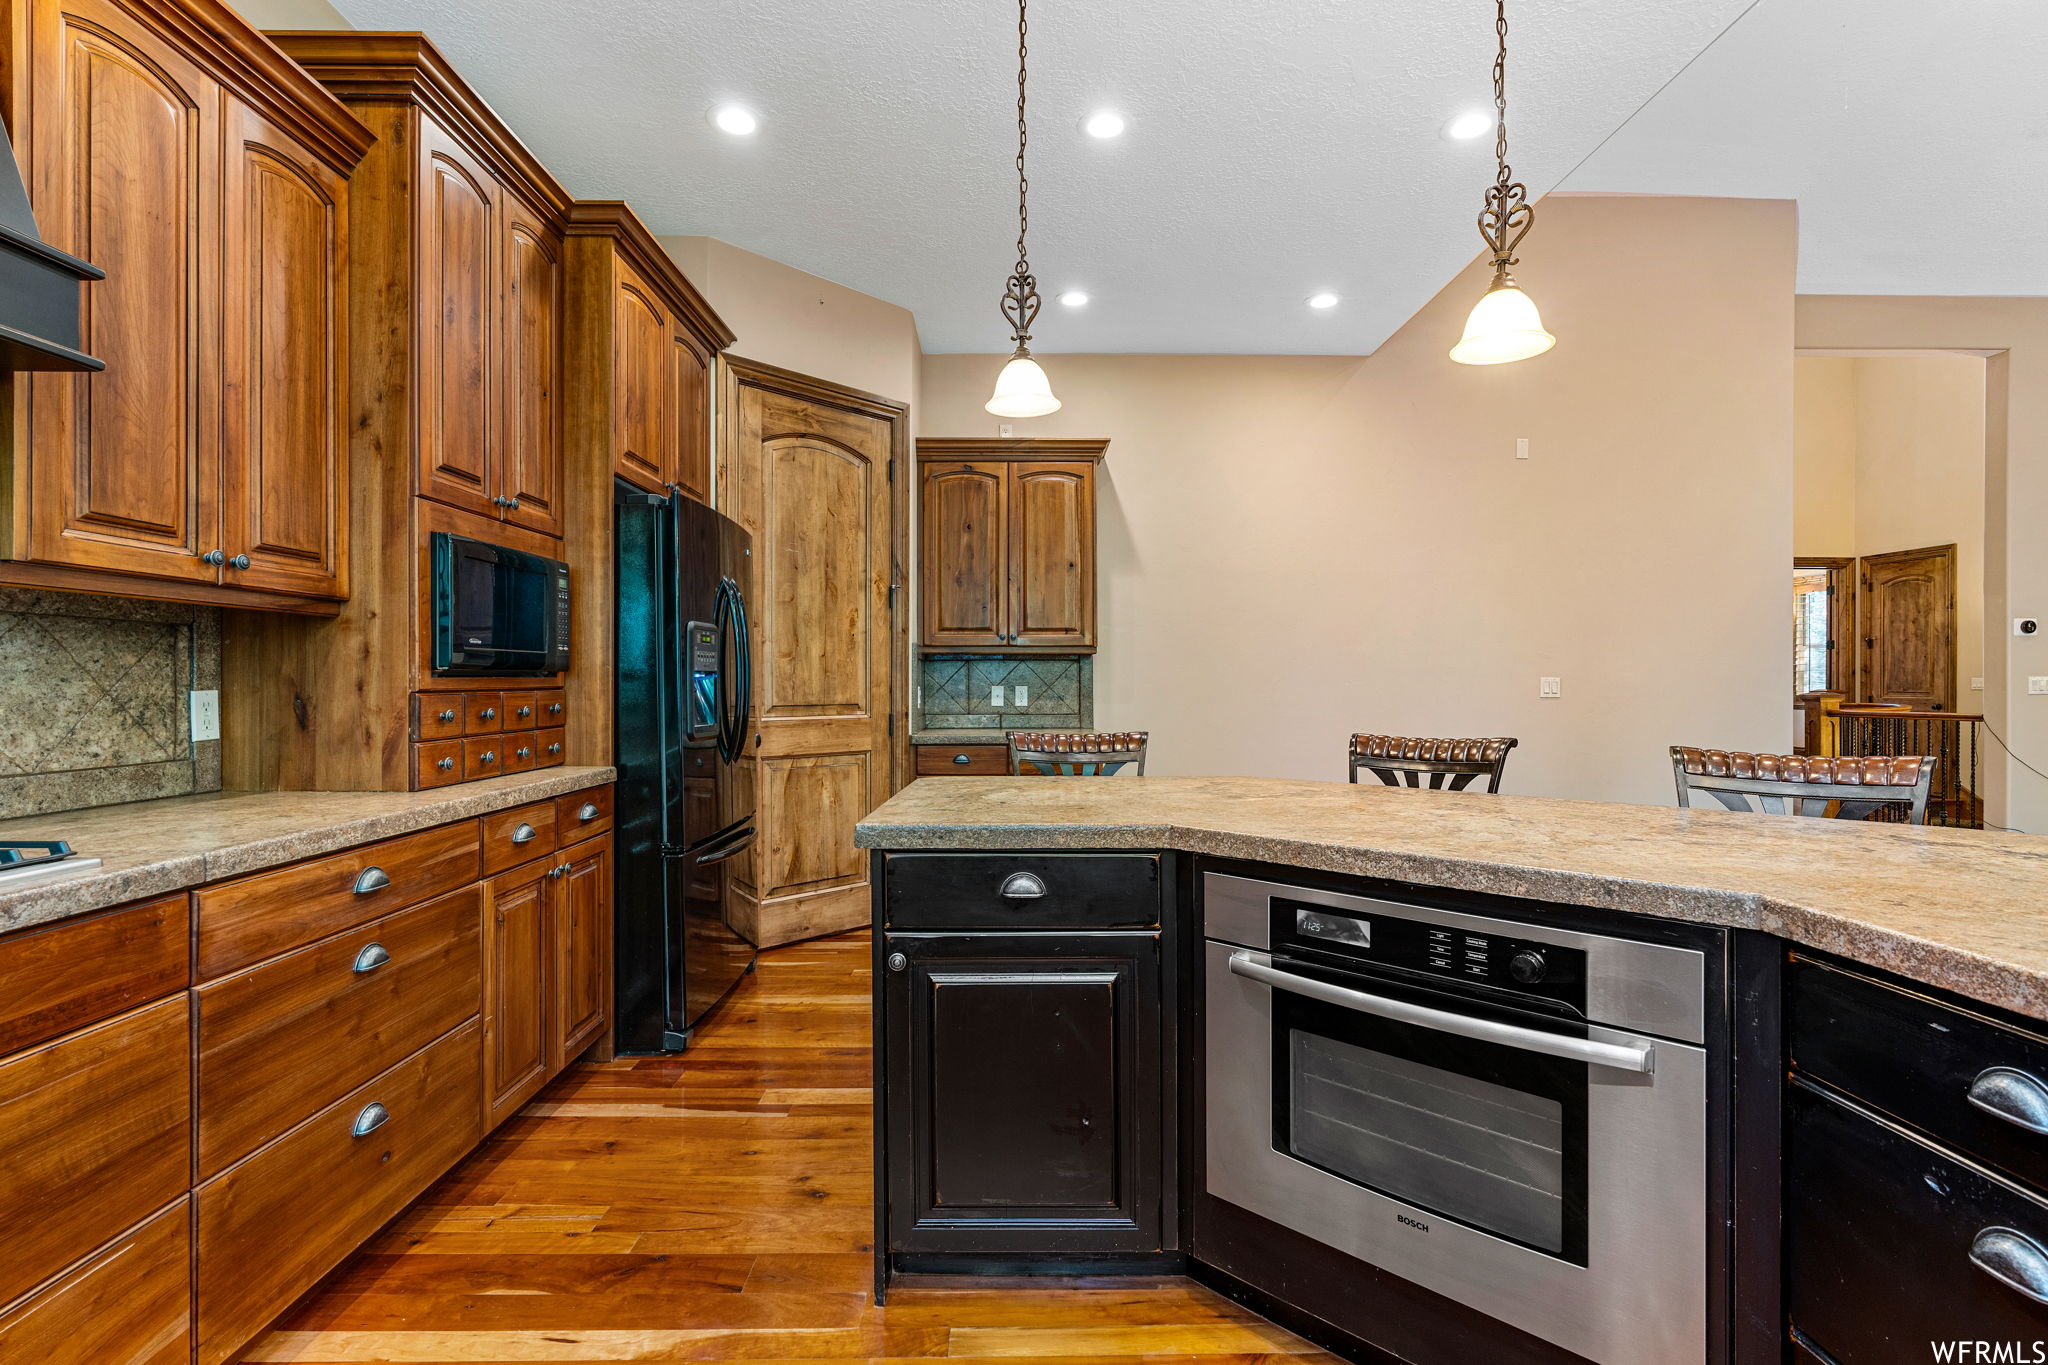 Kitchen featuring backsplash, decorative light fixtures, light hardwood floors, and black appliances